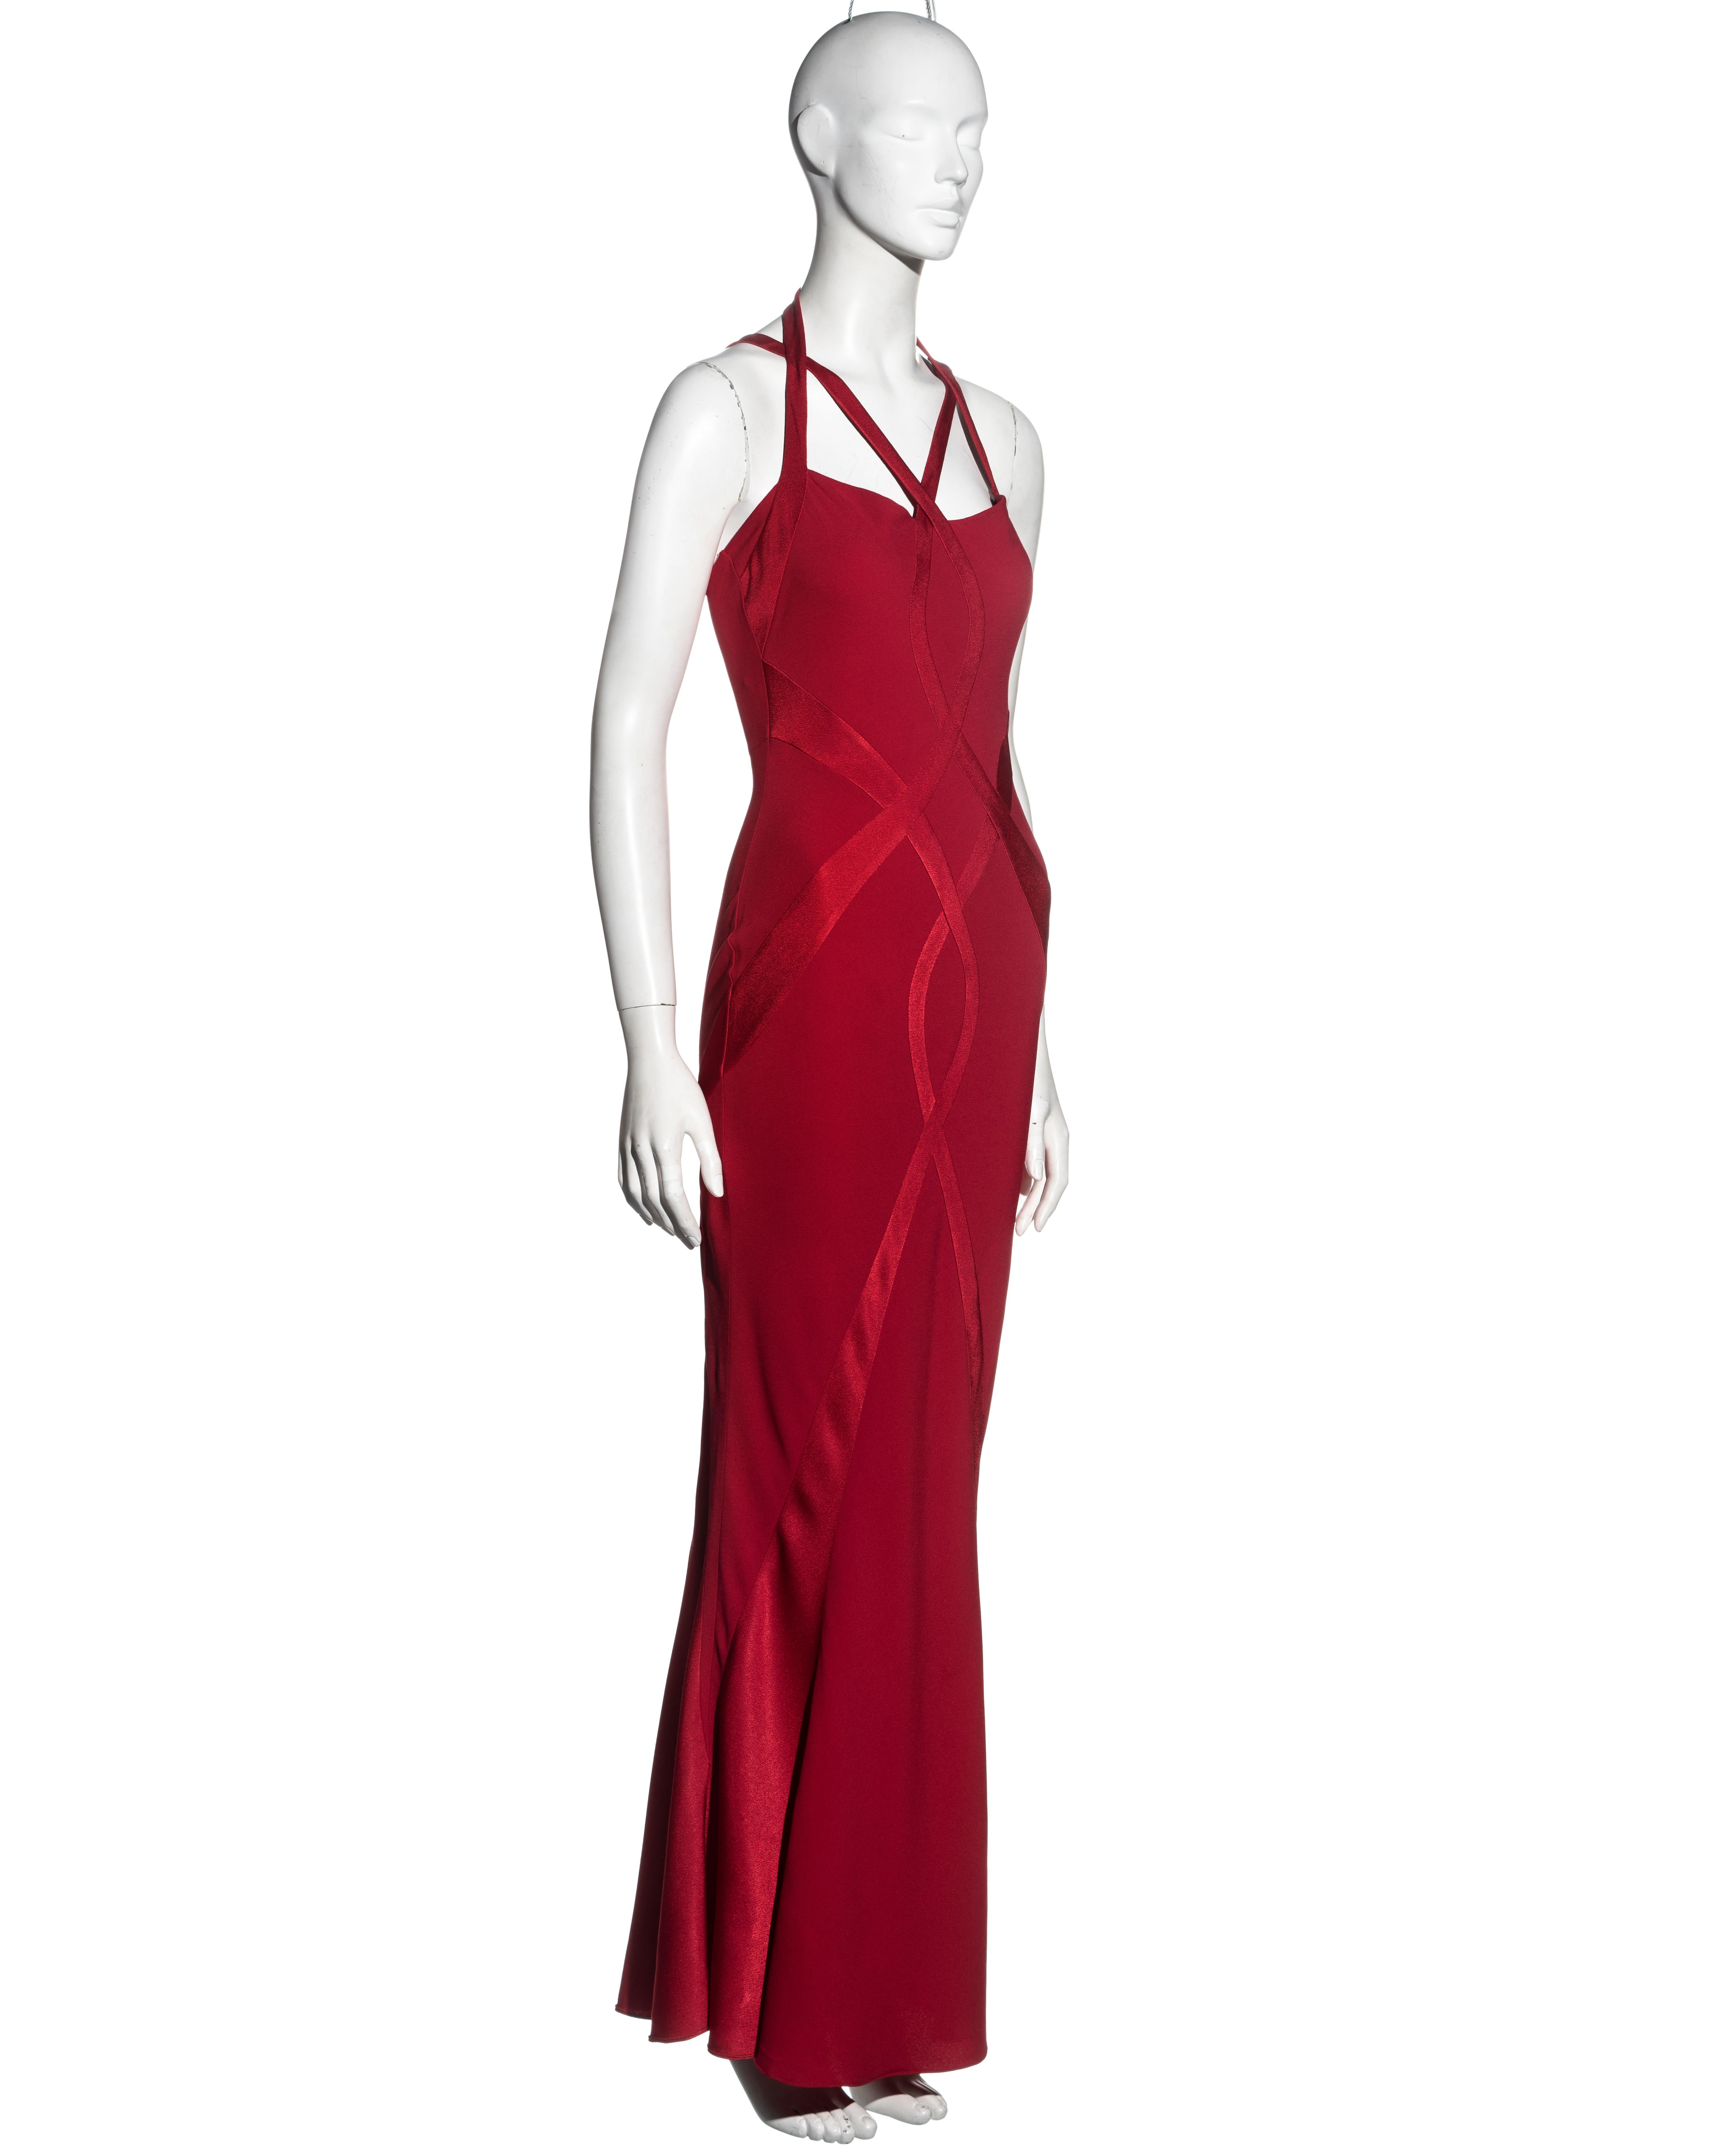 dior red dress